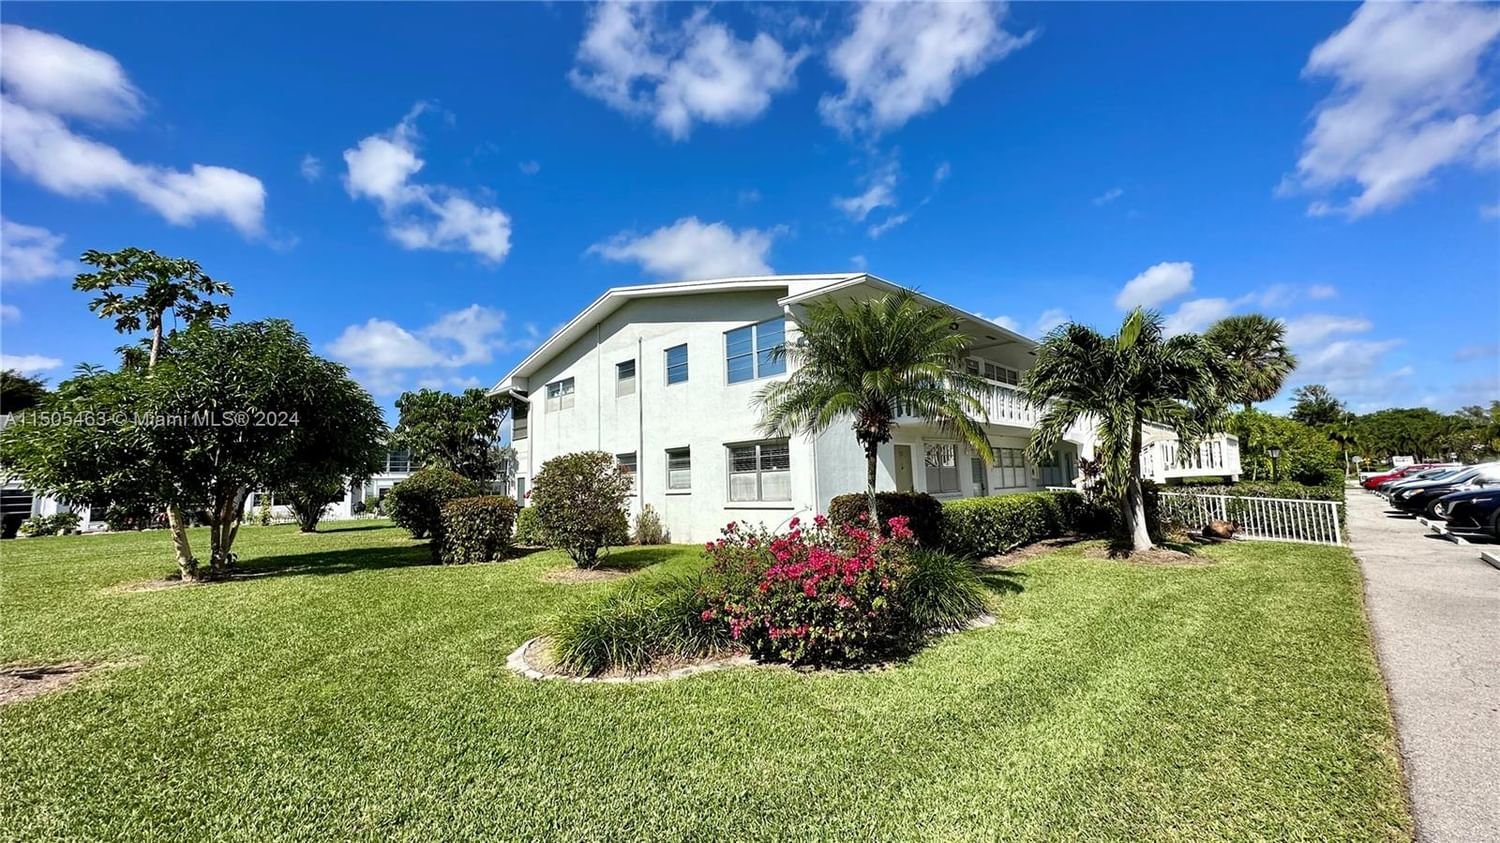 Real estate property located at 31 Harwood B #31, Broward County, HARWOOD B CONDO, Deerfield Beach, FL